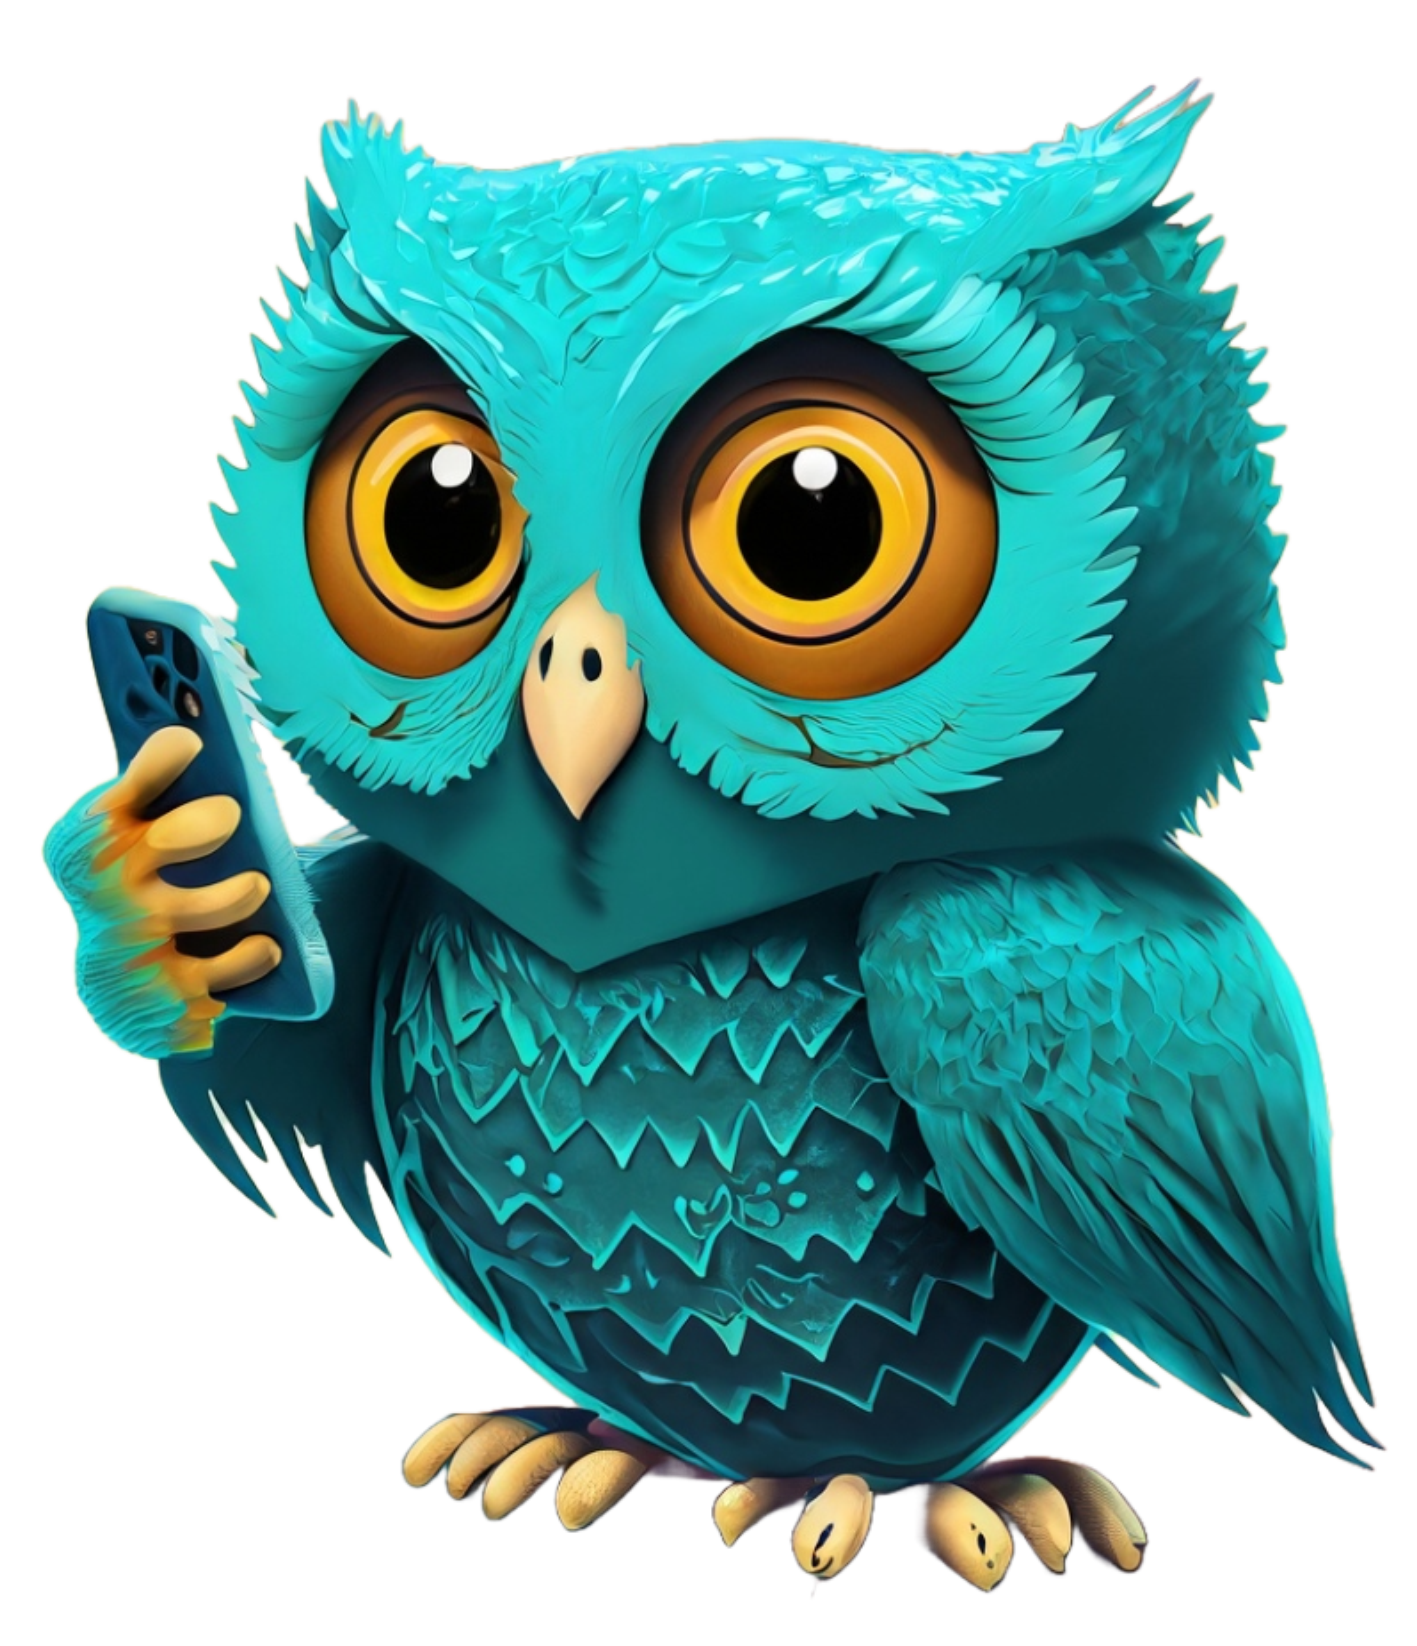 modern owl graphic checking social media on smart phone